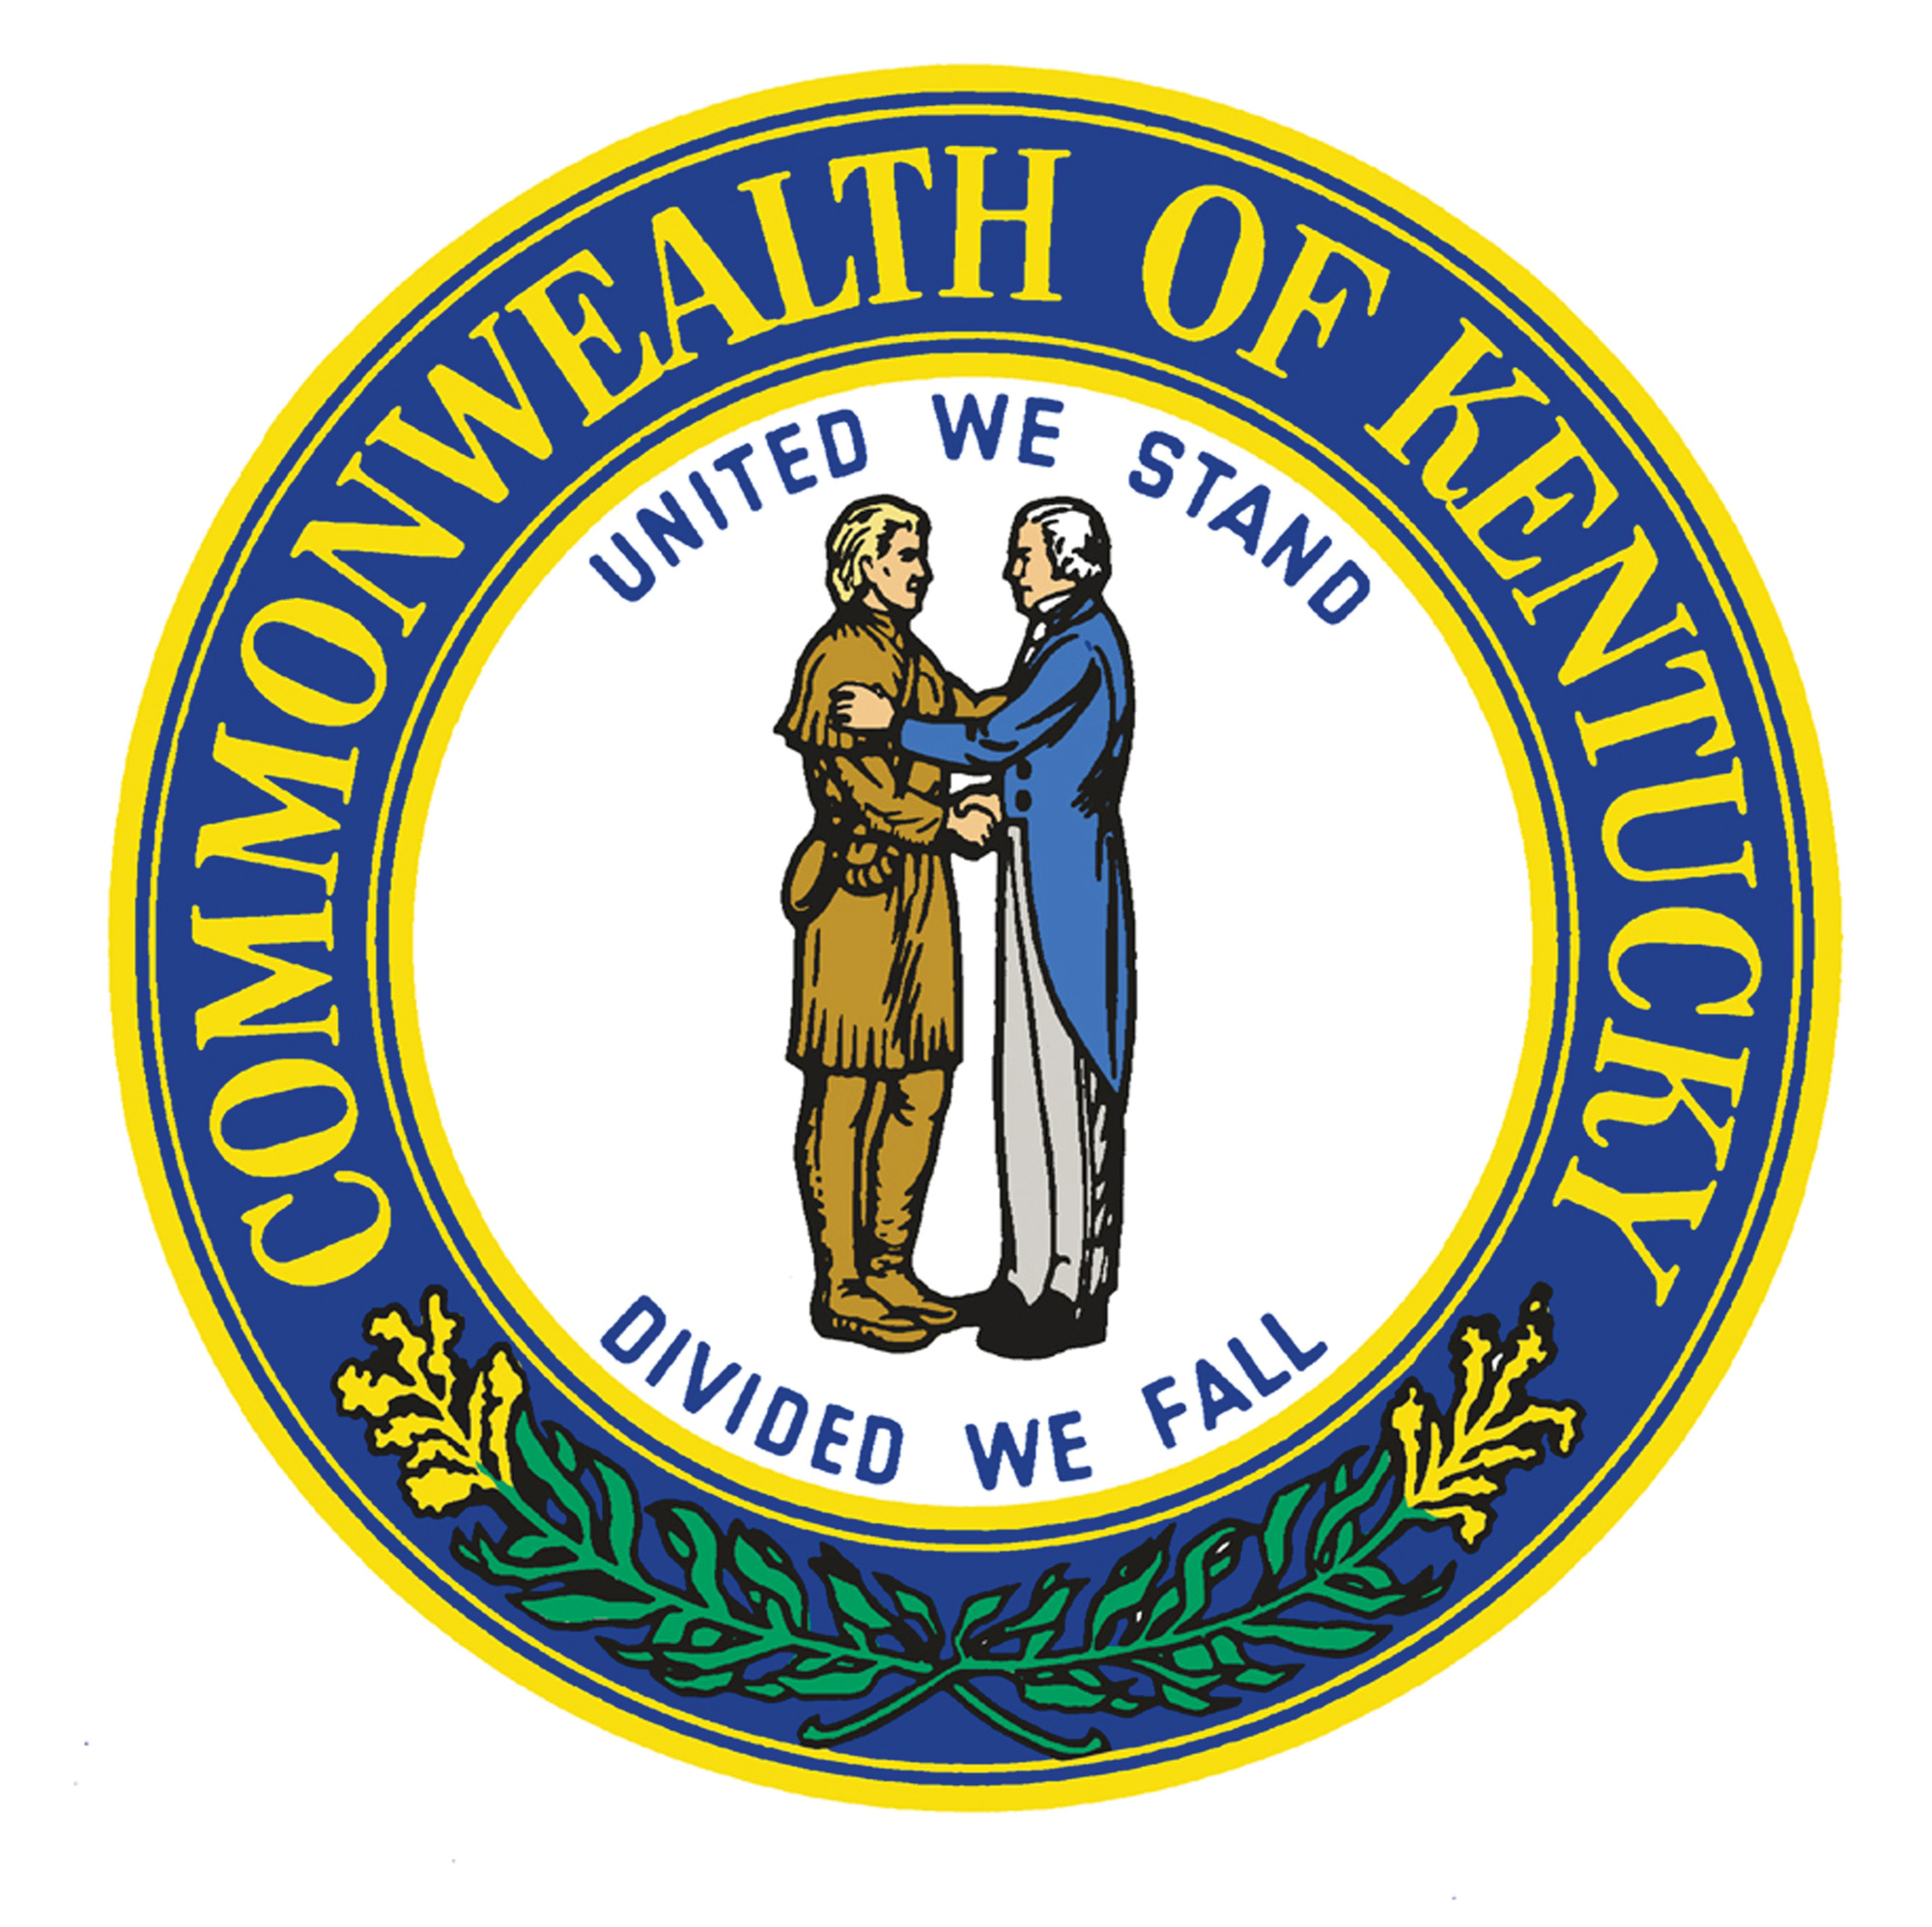 Kentucky Labor Cabinet